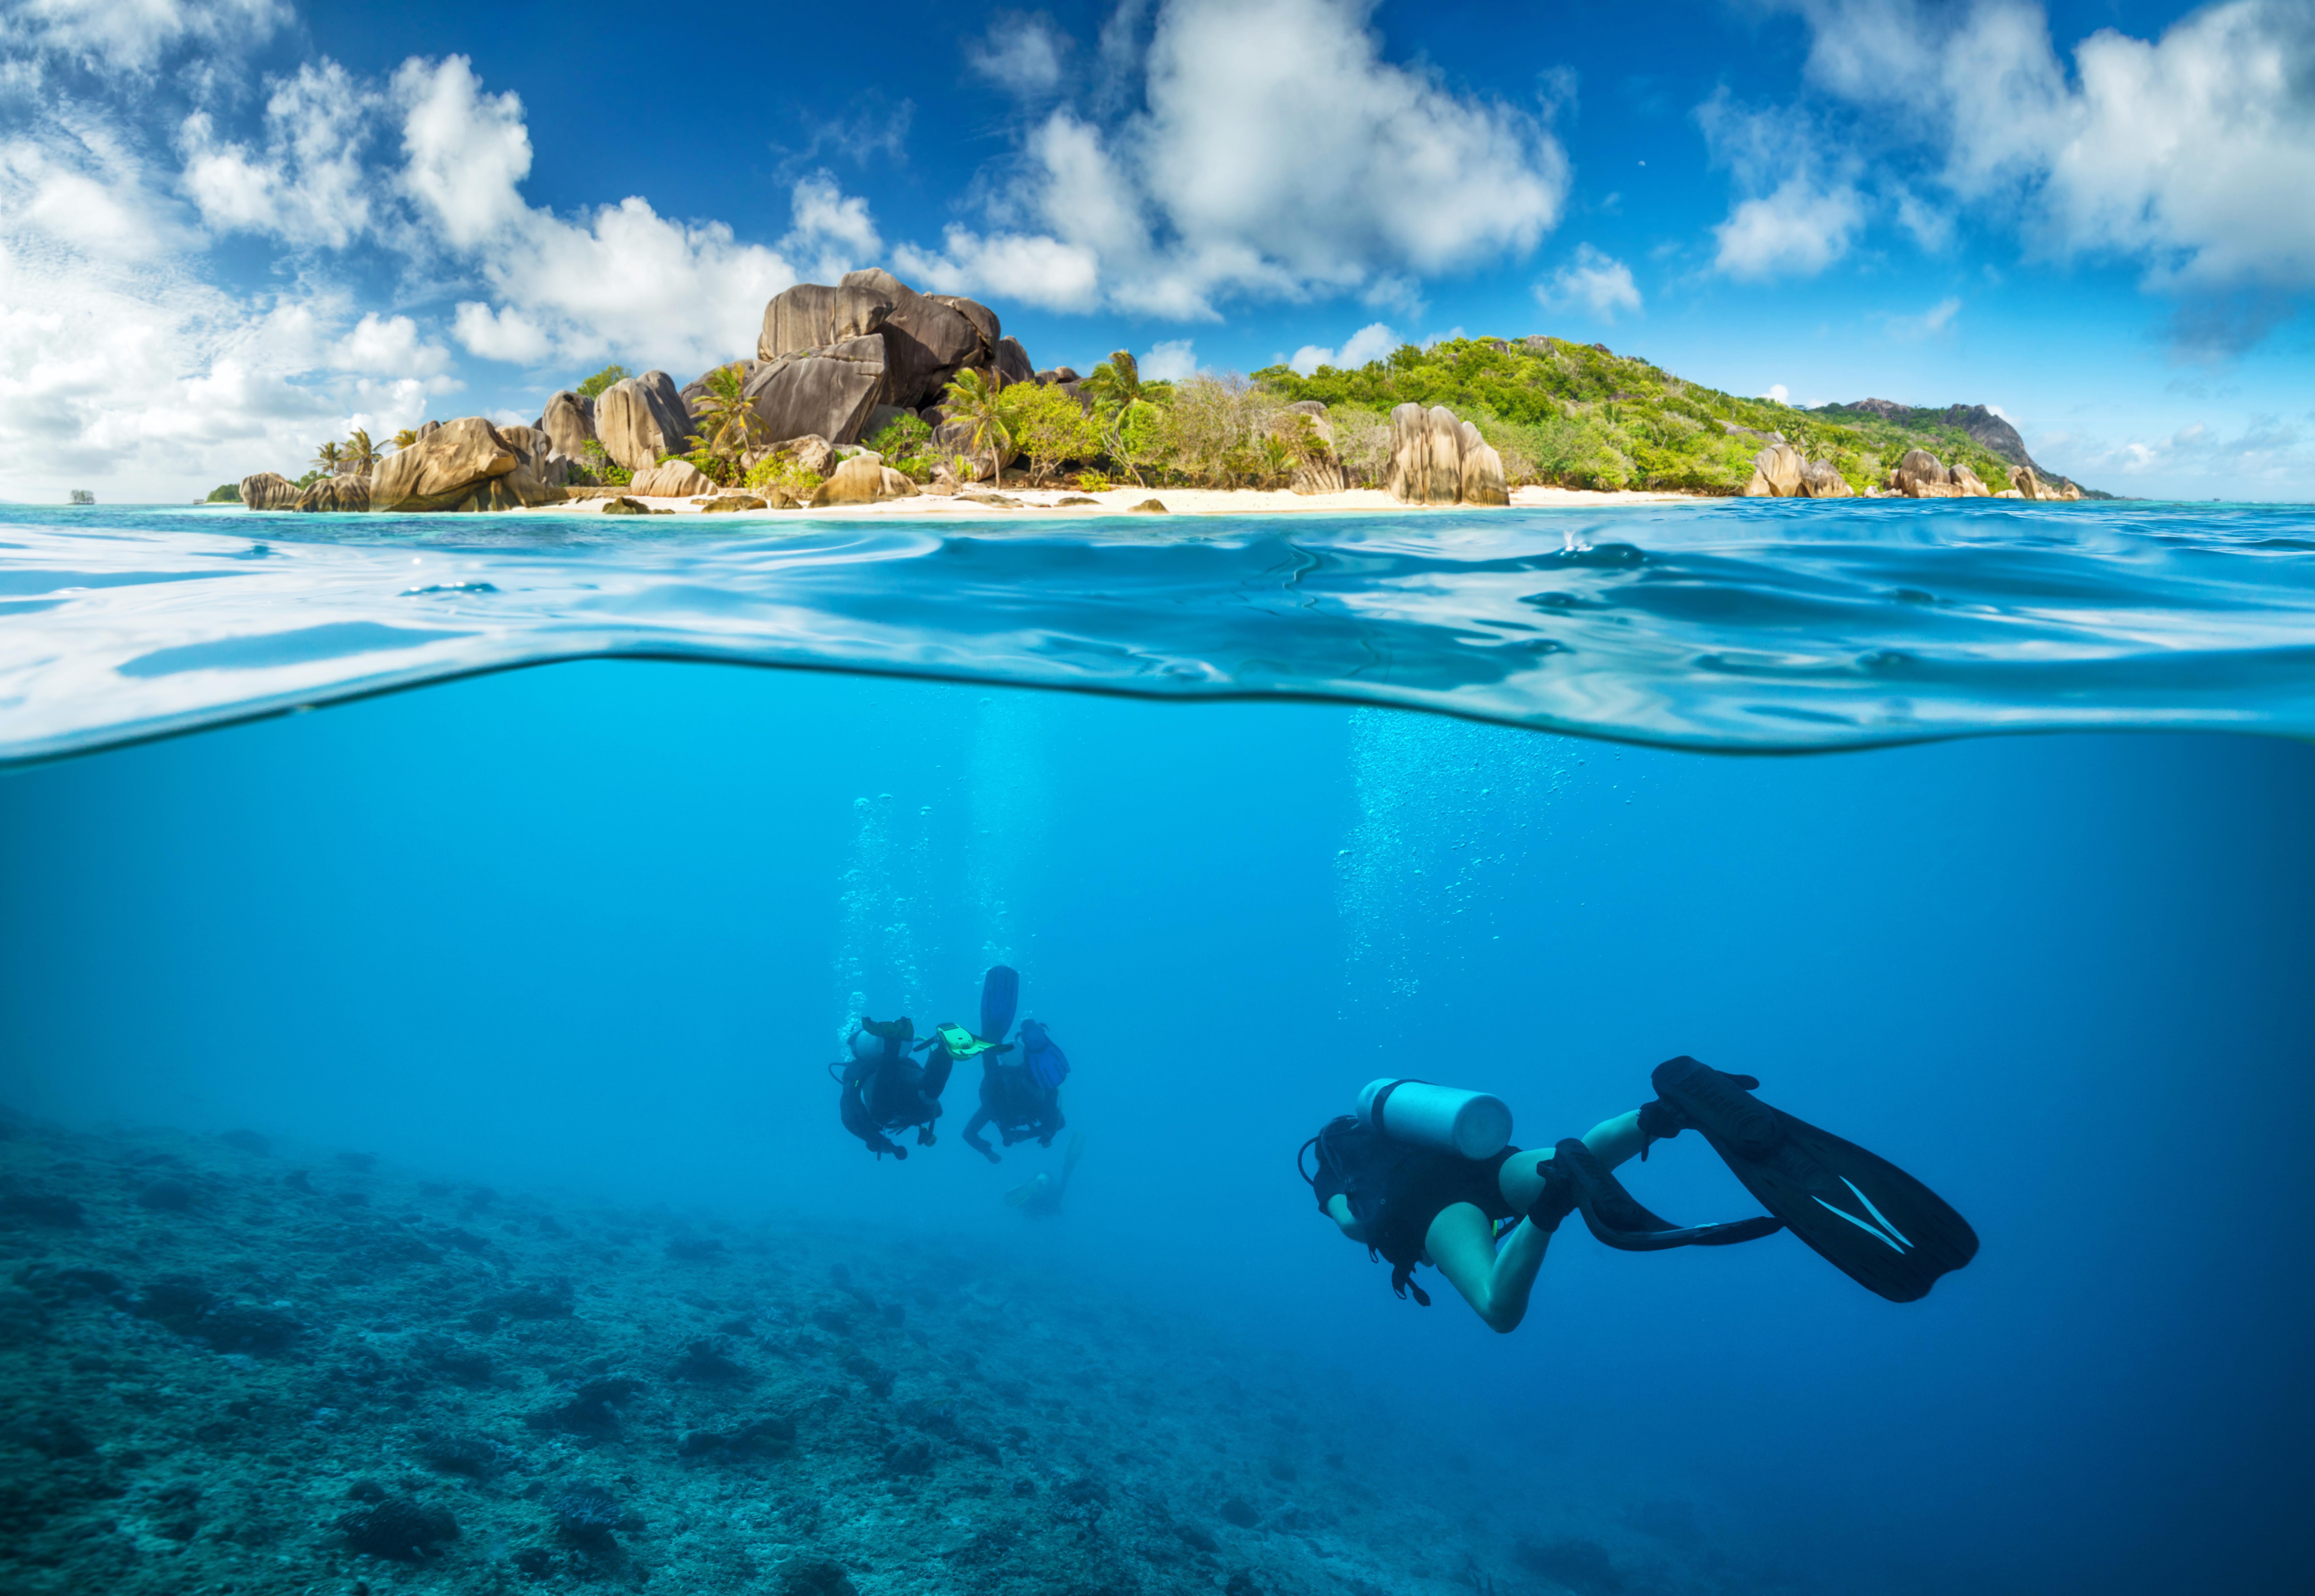 Landscape Scuba Underwater Coral Wetsuit Blurred Diving Suits Island Pacific Ocean Summer Split View 9000x6205